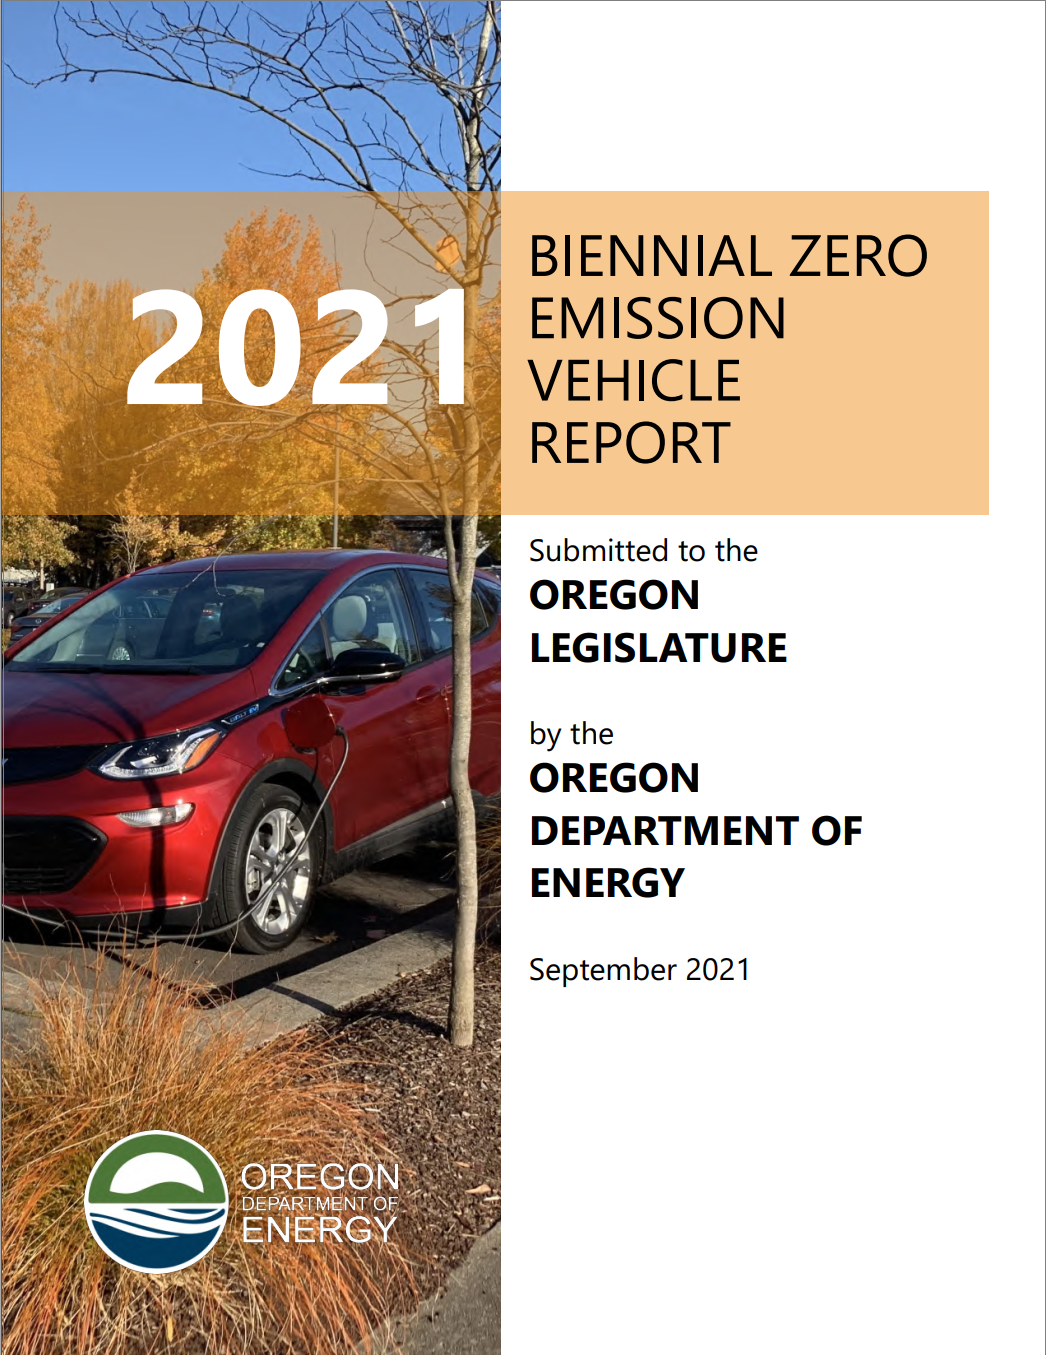 oregon-department-of-energy-releases-biennial-zero-emission-vehicle